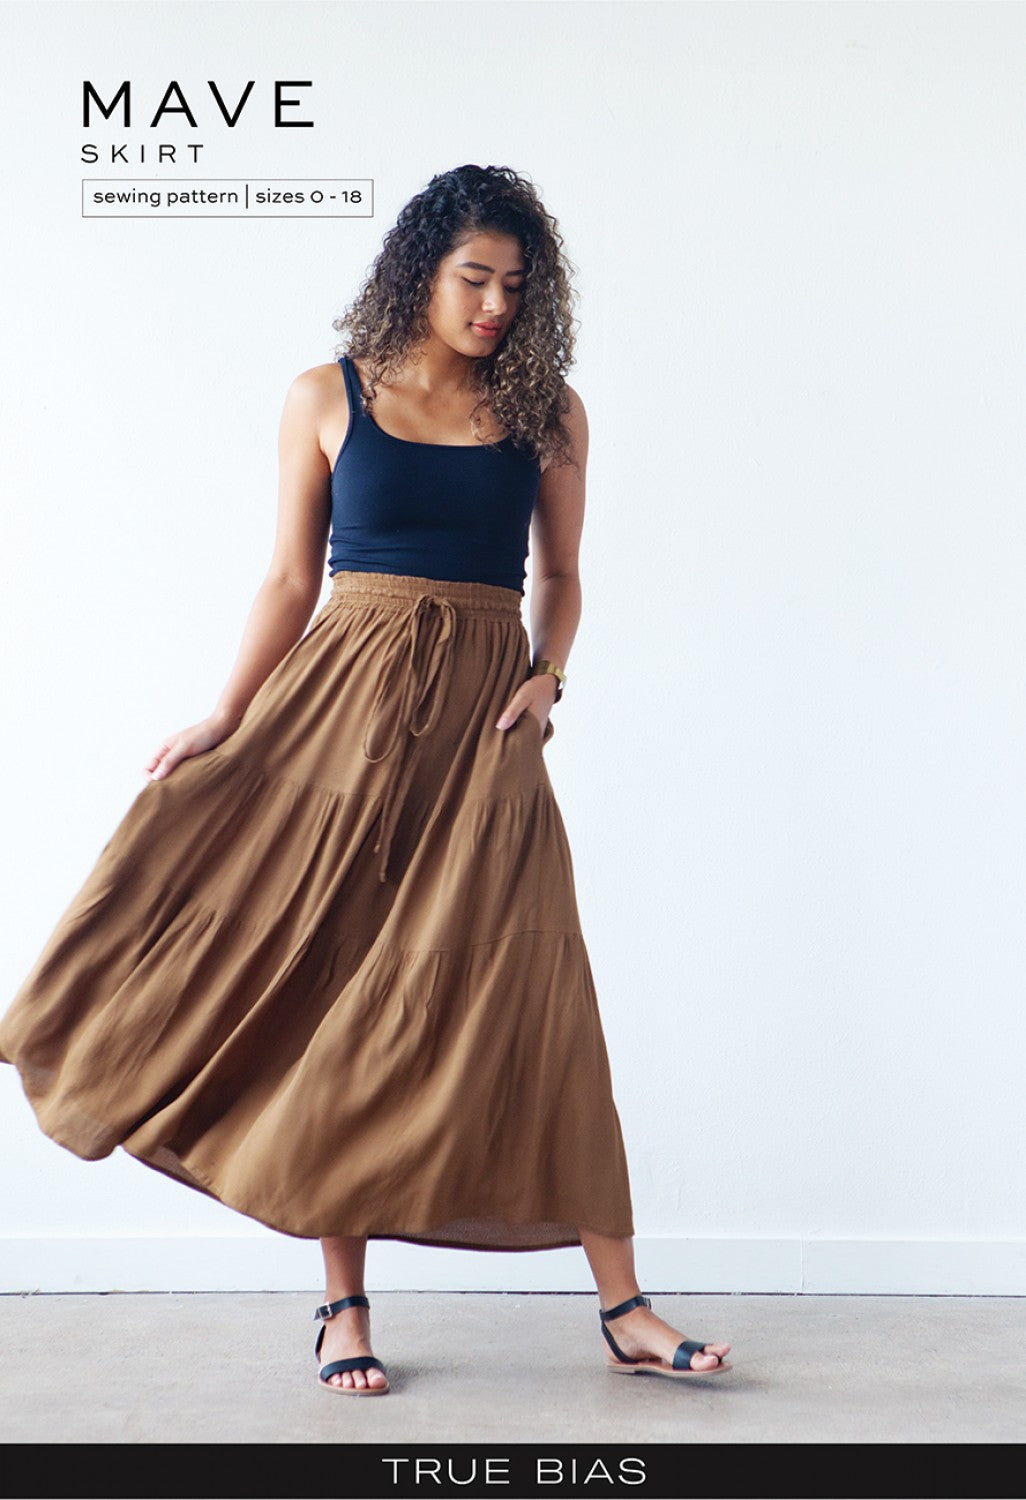 Introducing the New Garibaldi a-Line Skirt Sewing Pattern, Blog